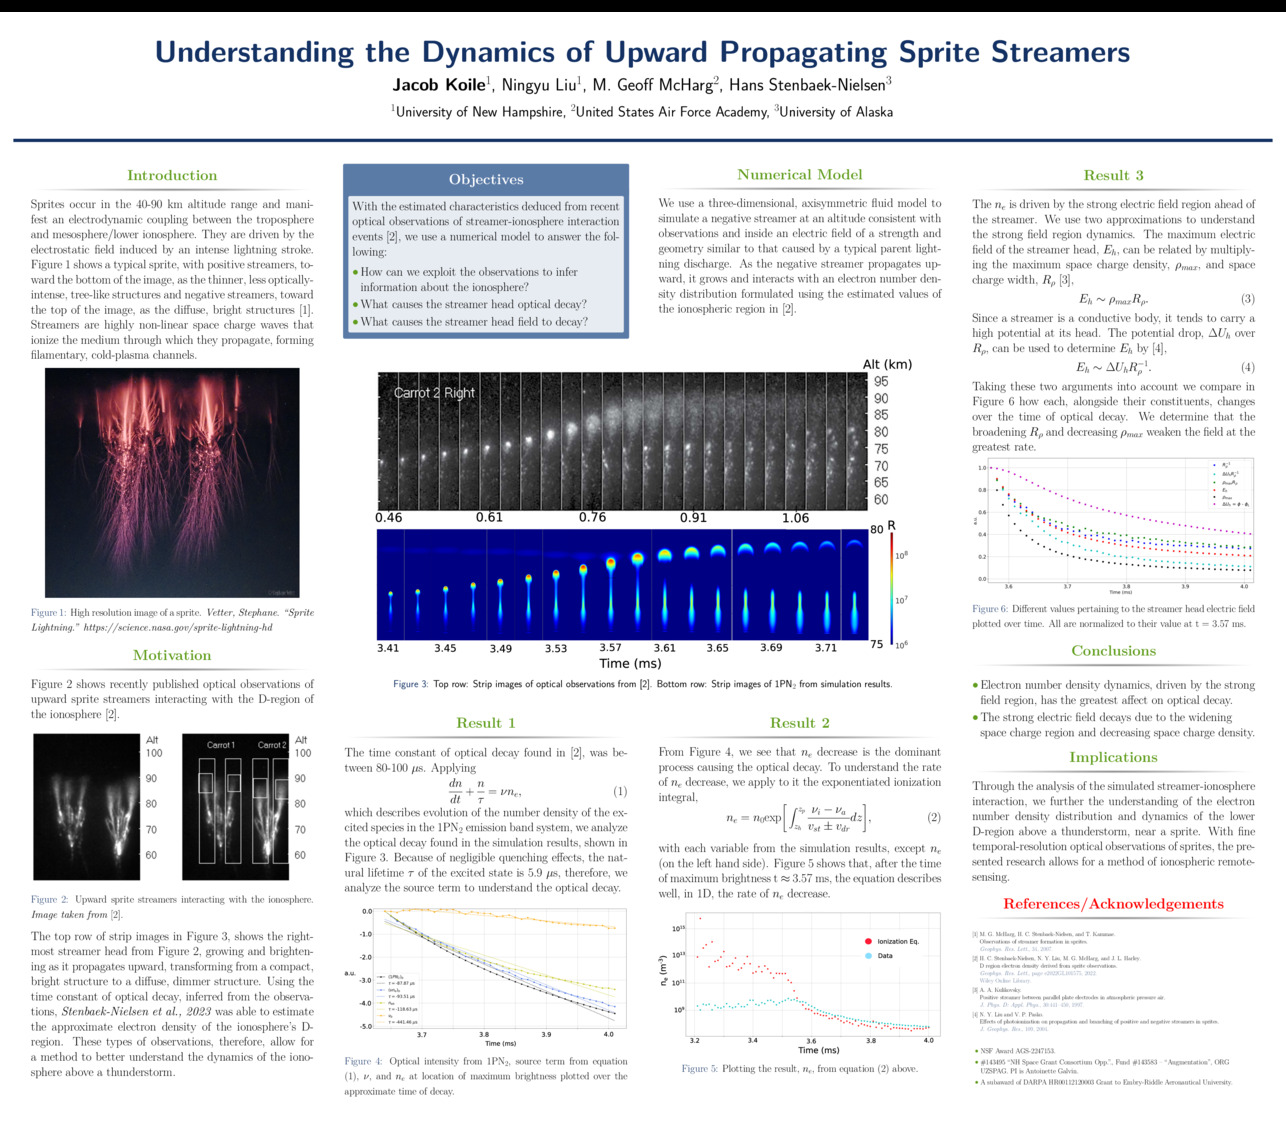 Understanding The Dynamics Of Upward Propagating Sprite Streamers by jhk1009